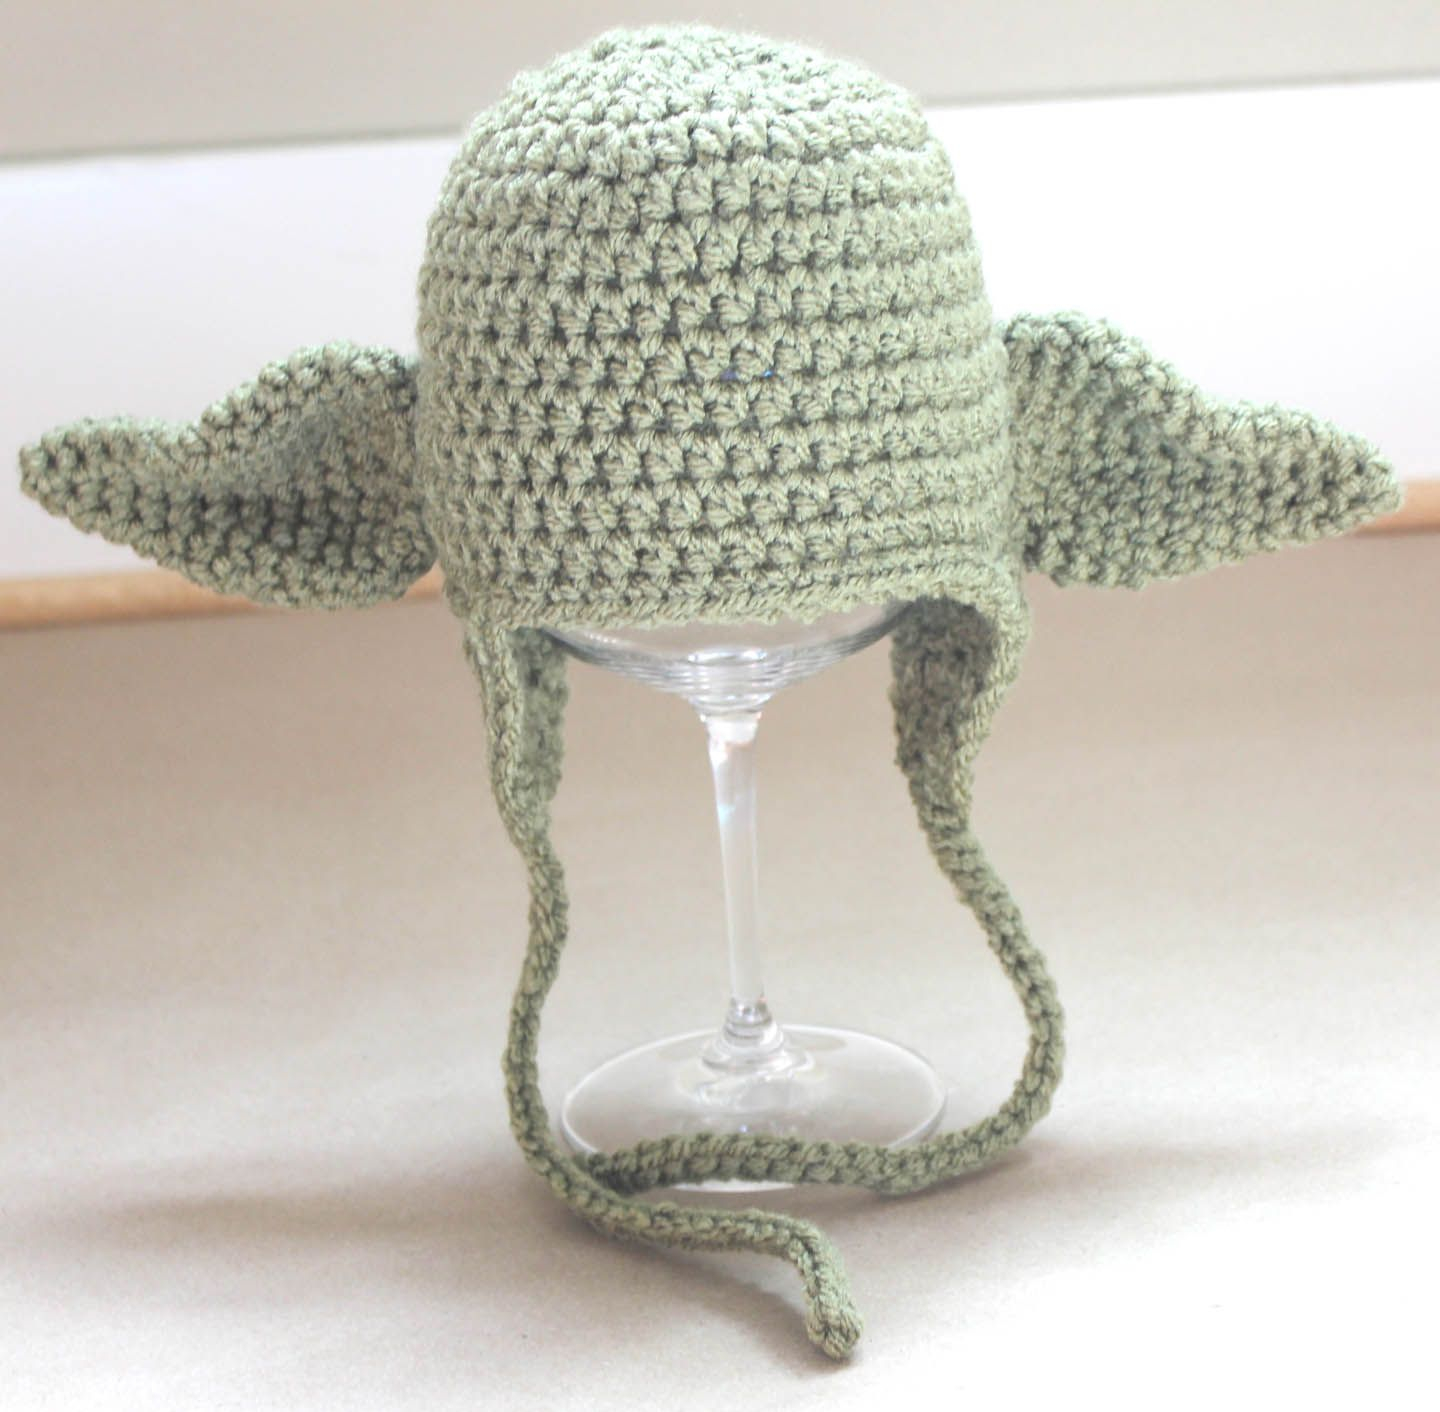 Crochet Yoda Hat Pattern Free Crochet Yoda Hat Crochet Hat Patterns Inspiration Pinterest